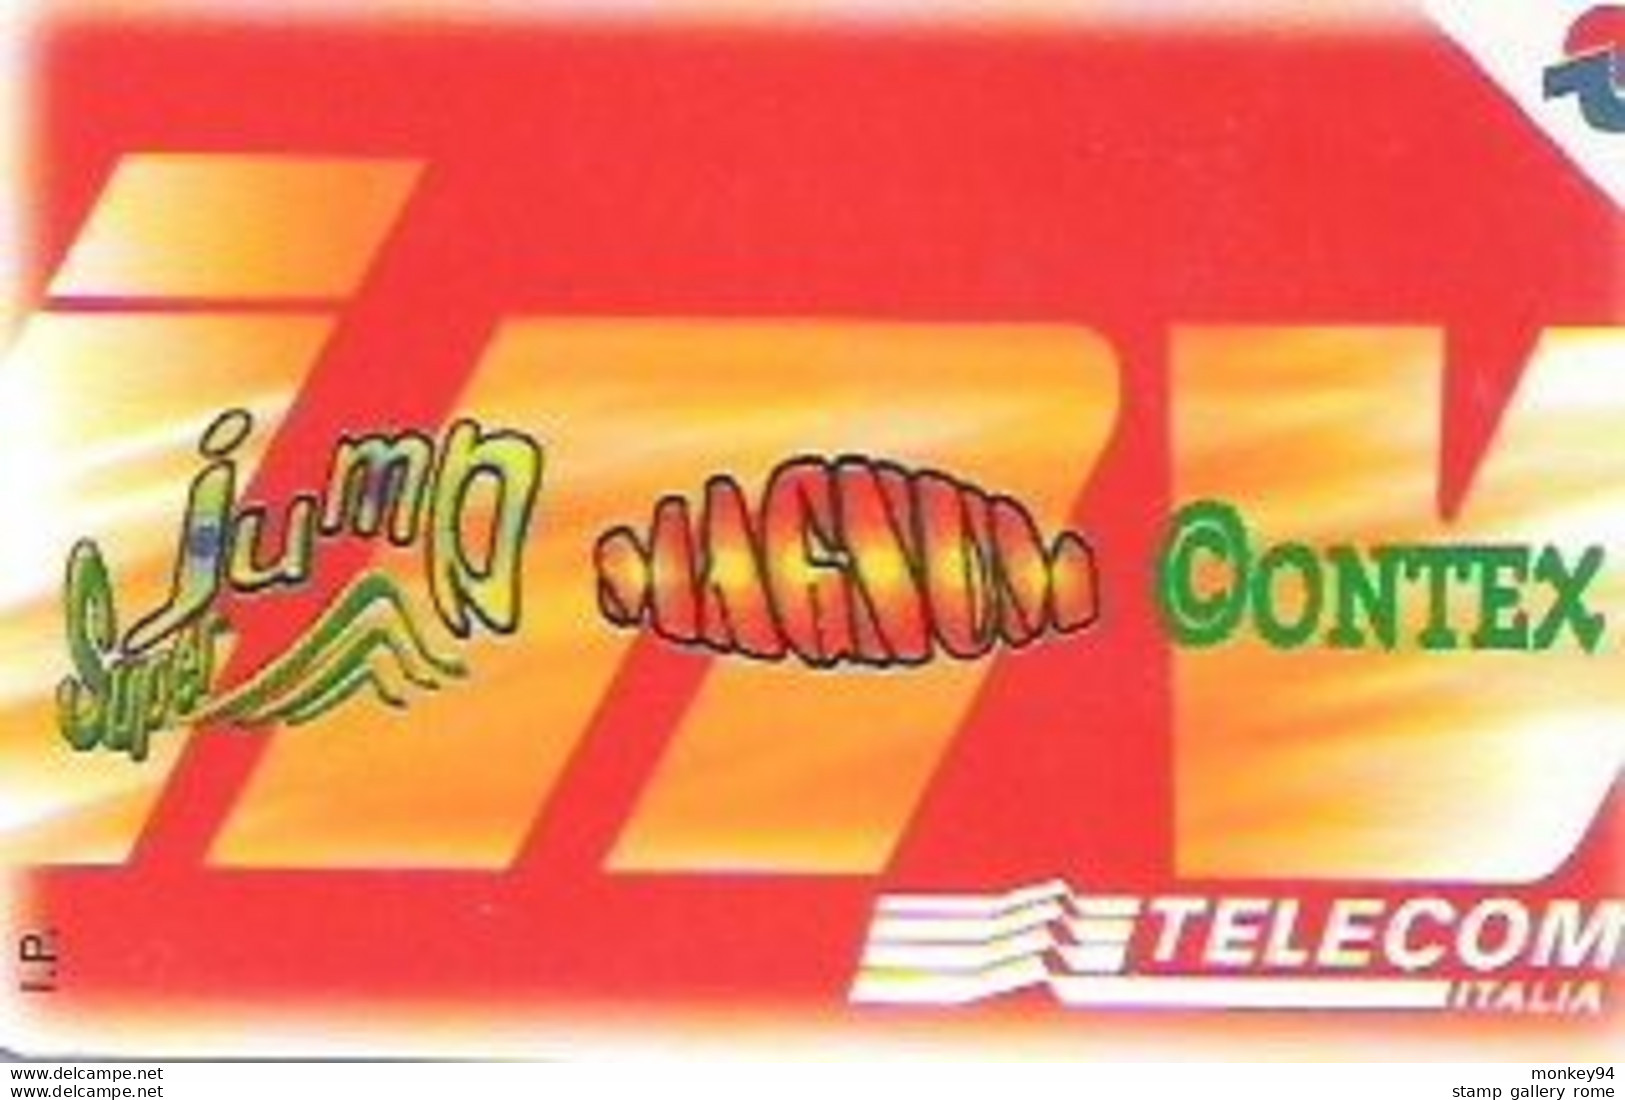 TELECOM - INVICTA  - CONTEX - LIRE 2000 - GOLDEN 833 - Öff. Sonderausgaben